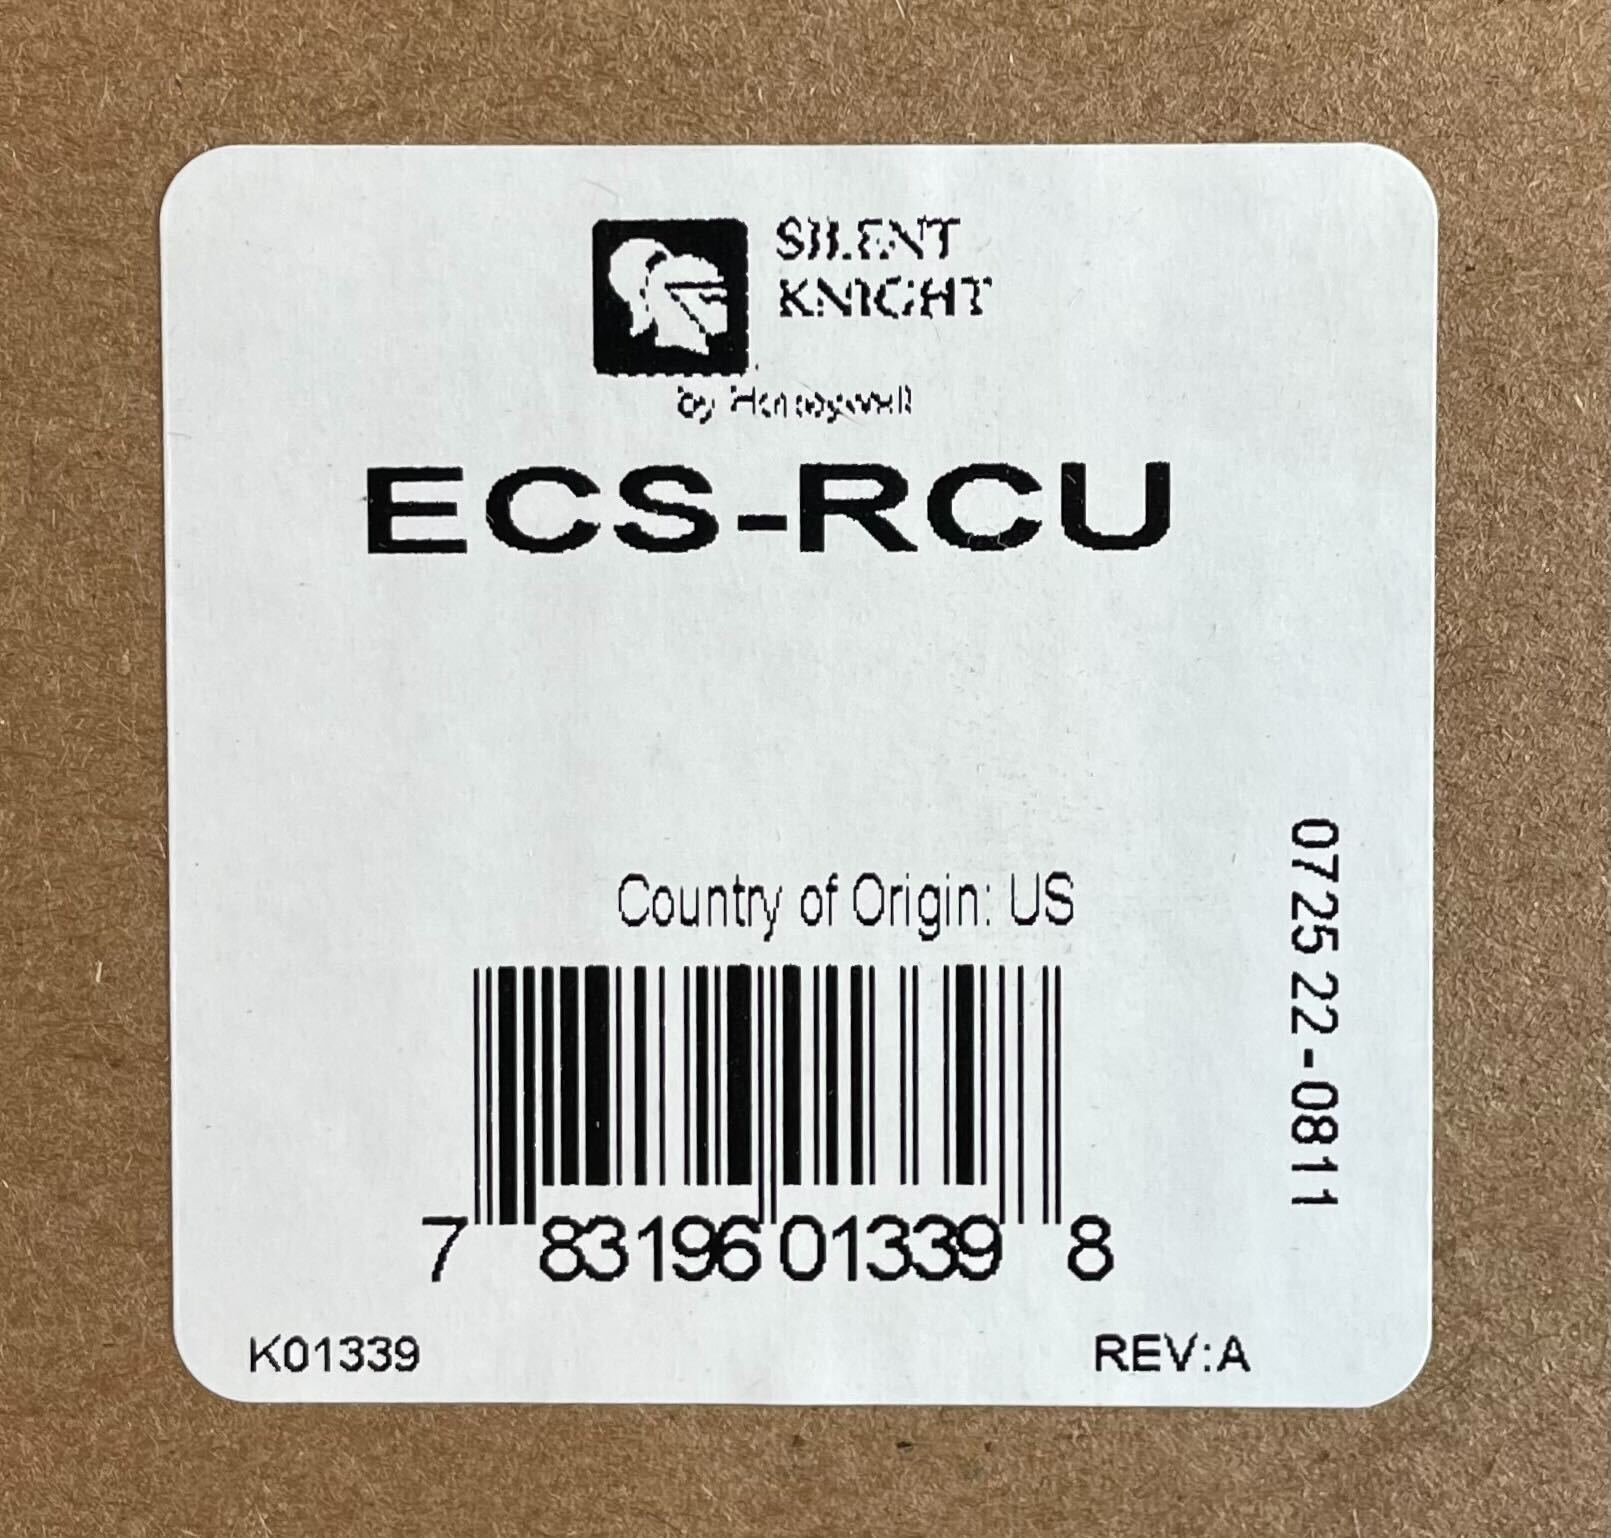 Silent Knight ECS-RCU - The Fire Alarm Supplier